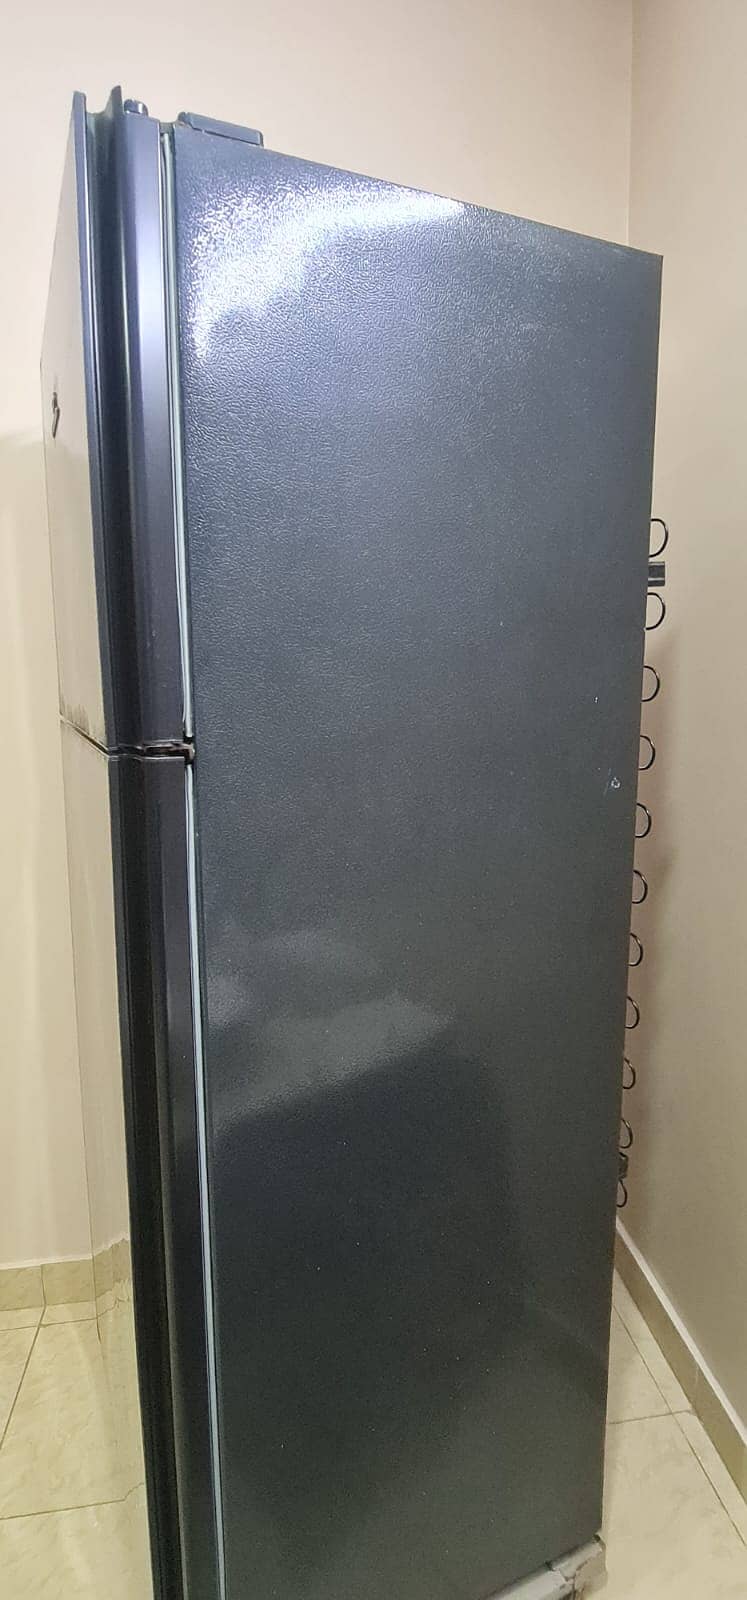 Dawlance 91996 ES PLUS 18cft Refrigerator 1